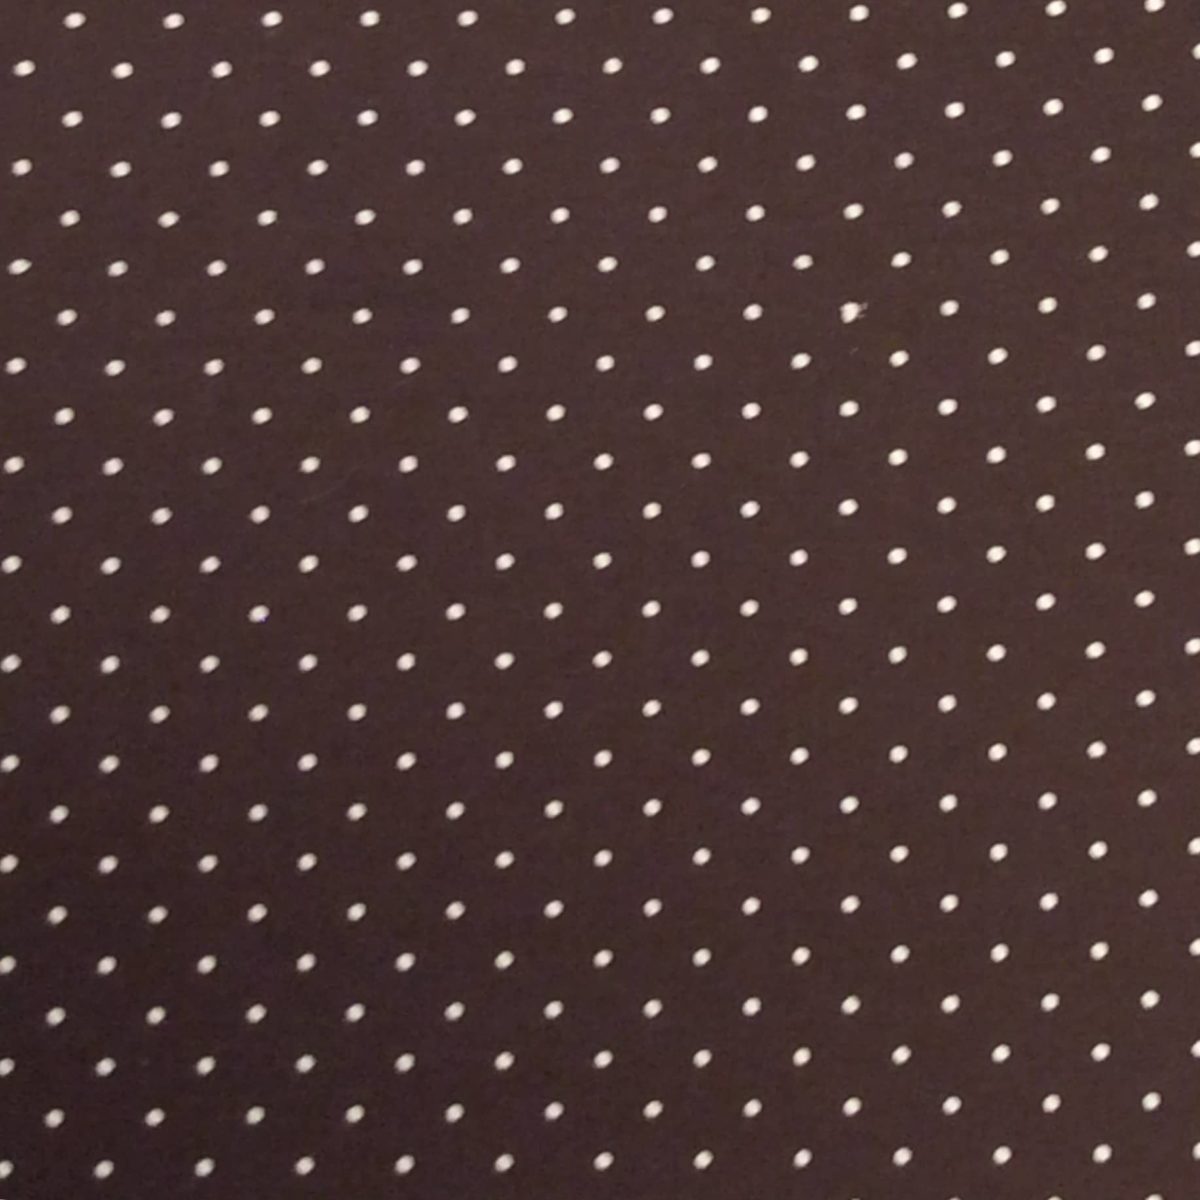 Fabric-Swatch-Cotton-Brown-Poka-Dots-Cotton